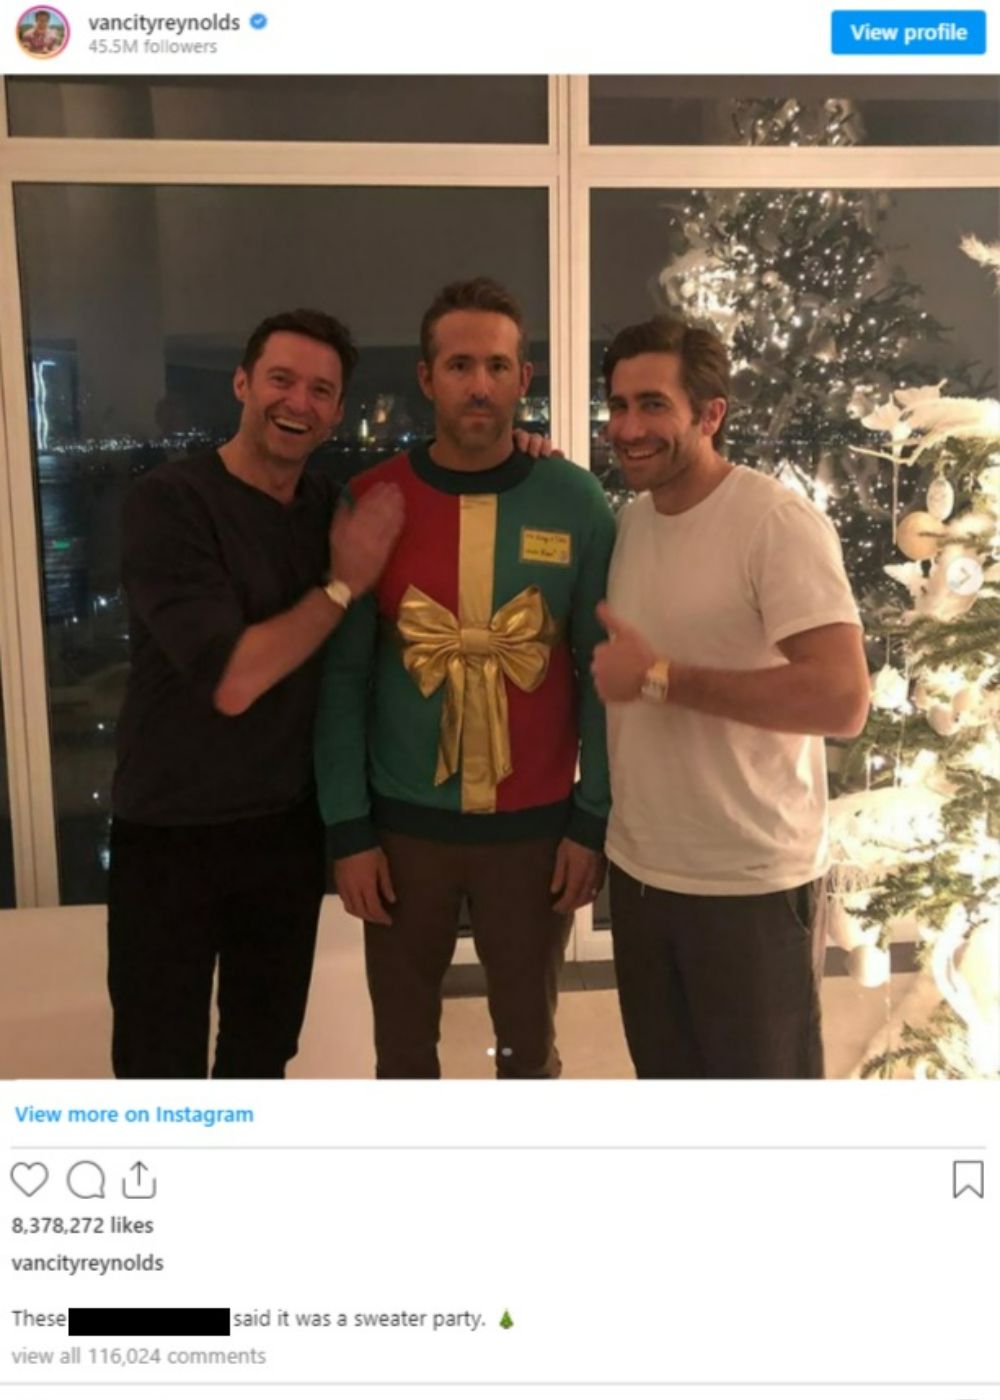 Hugh Jackman, Jake Gyllenhaal and Ryan Reynolds